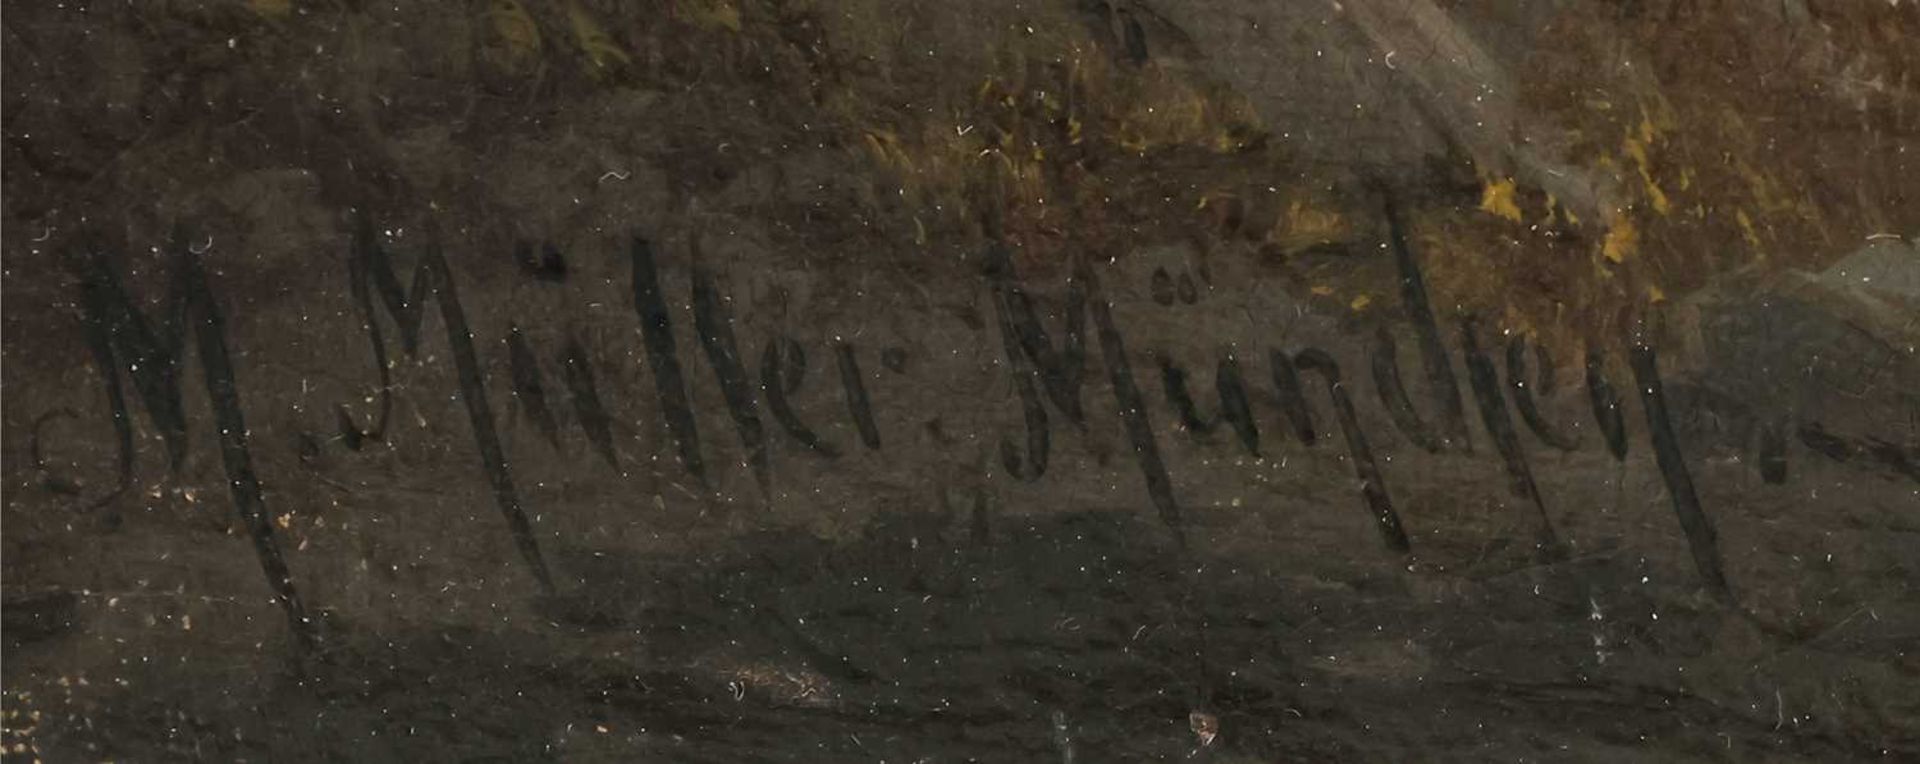 MORITZ MÜLLER (1841 München - 1899 ebenda) - Image 2 of 4